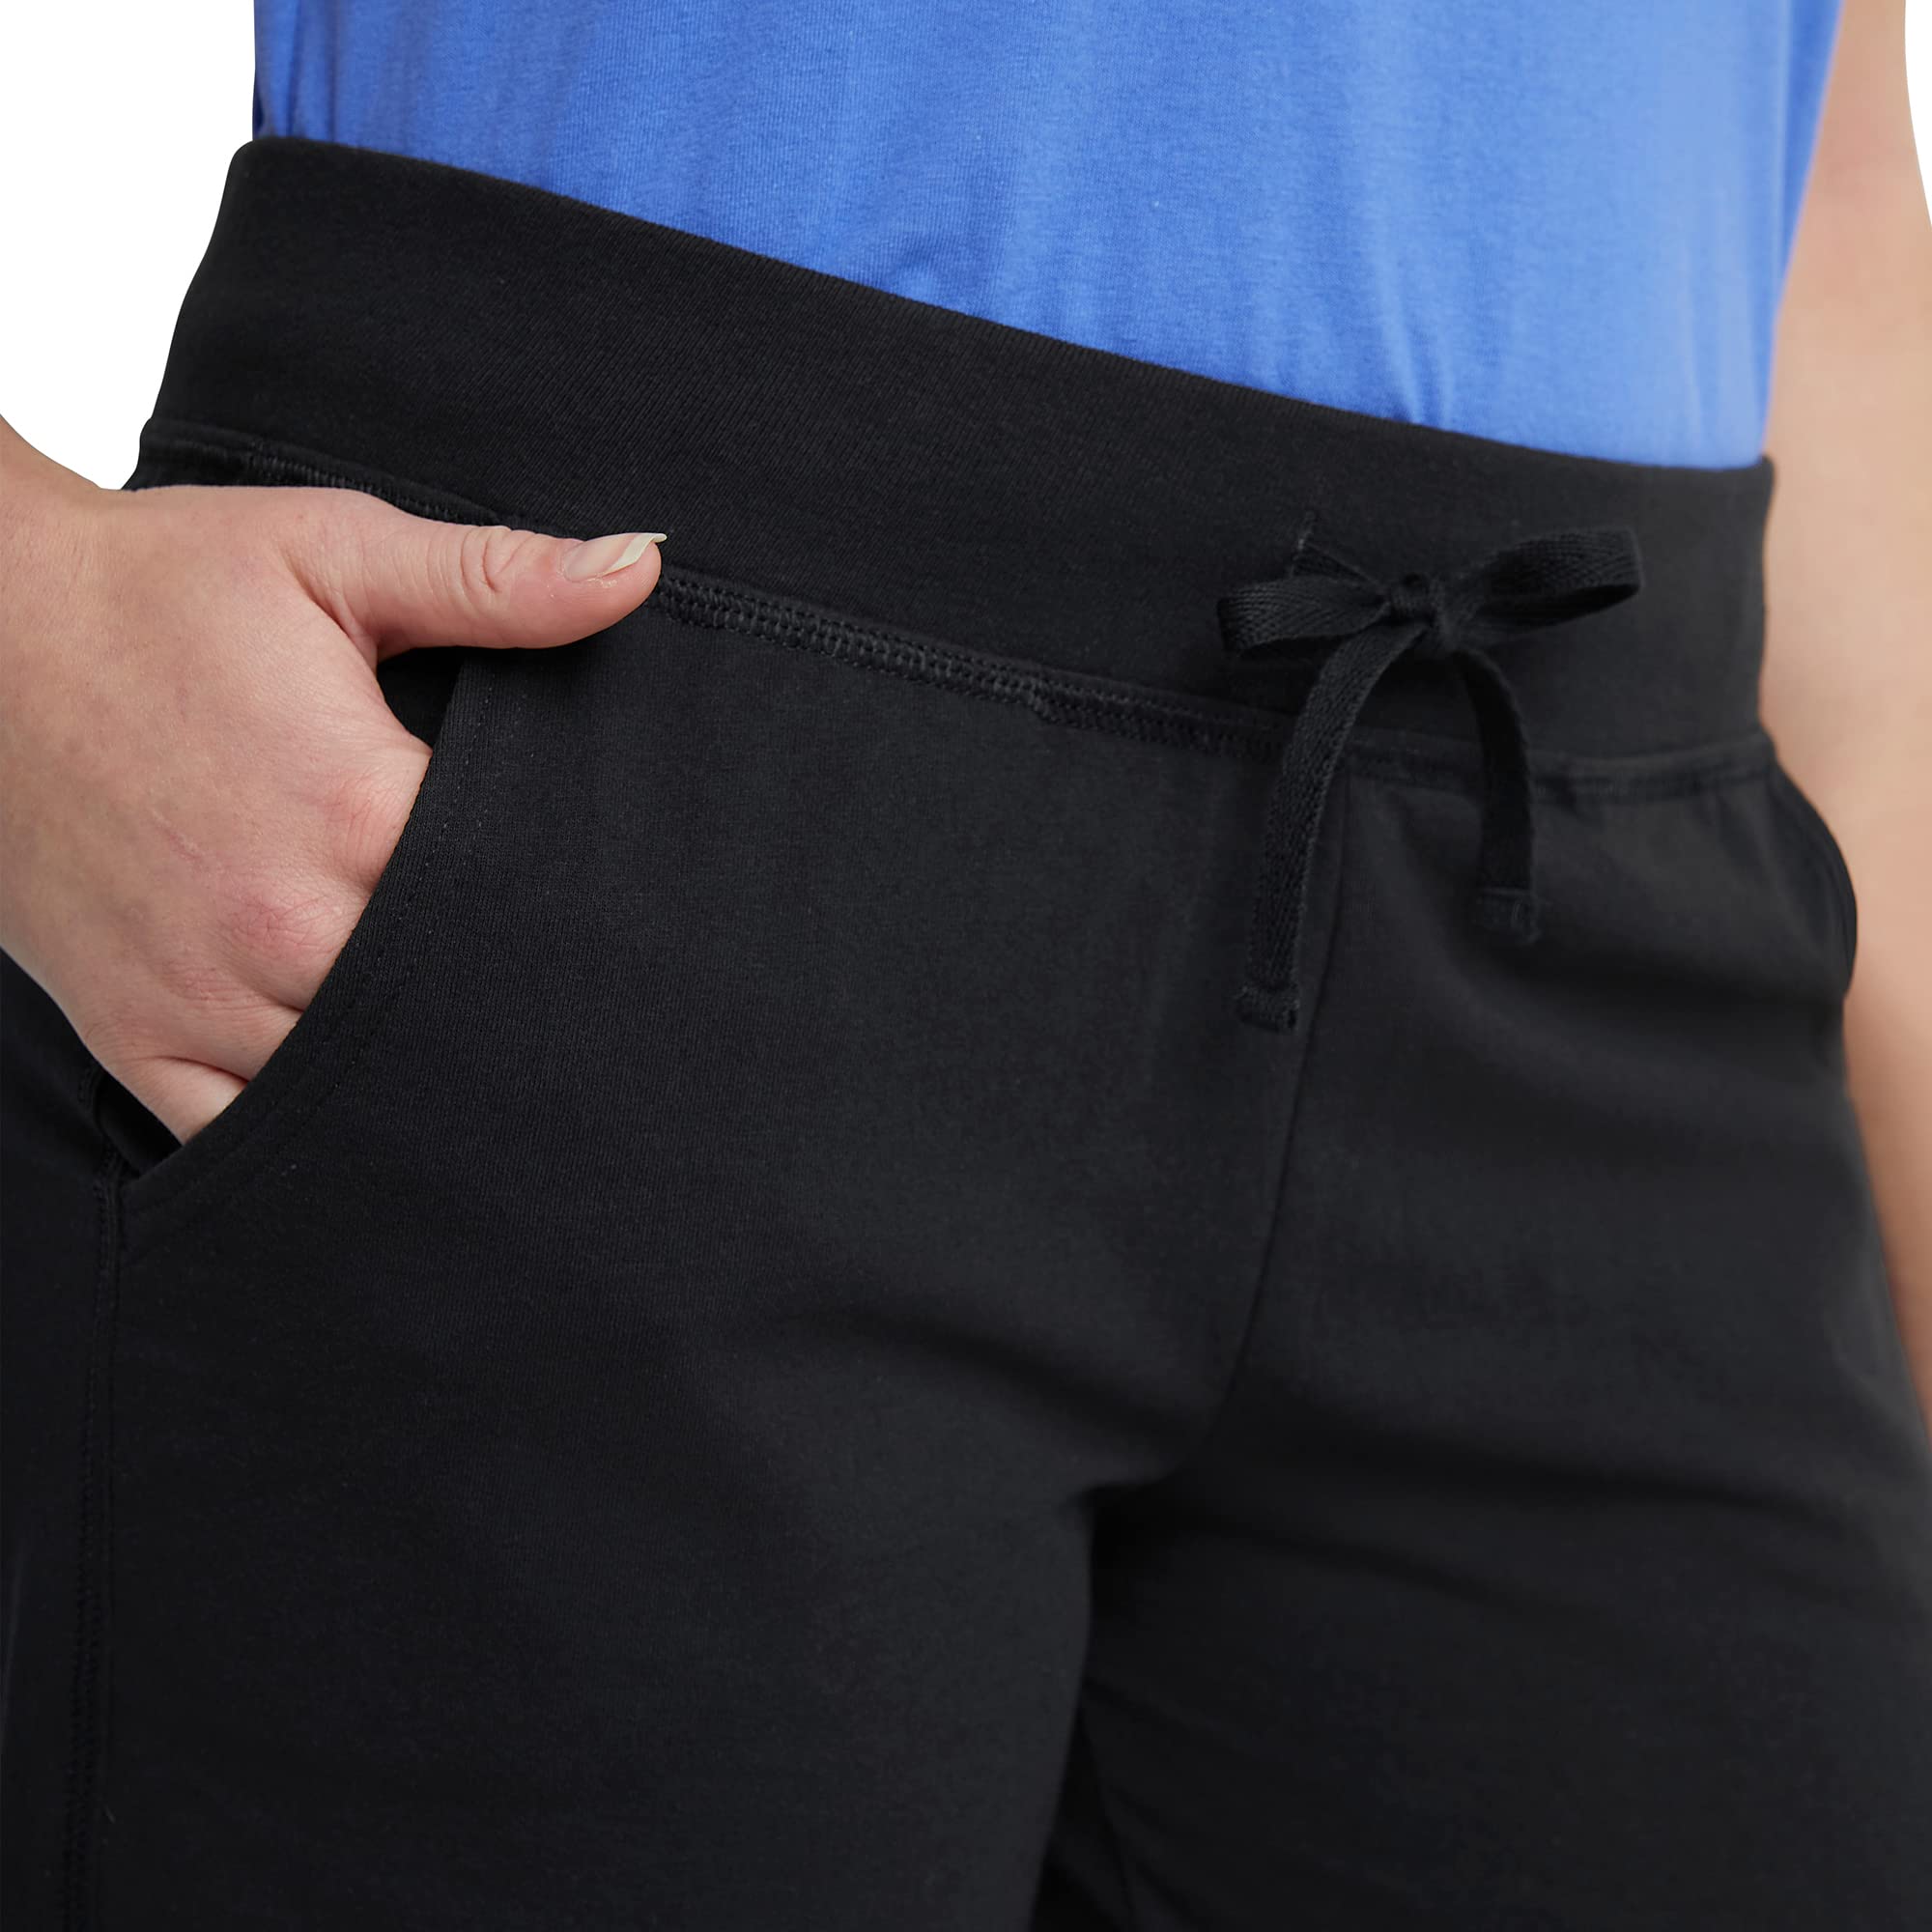 Hanes Women's Jersey Pocket Shorts, Drawstring Cotton Jersey Shorts, 7